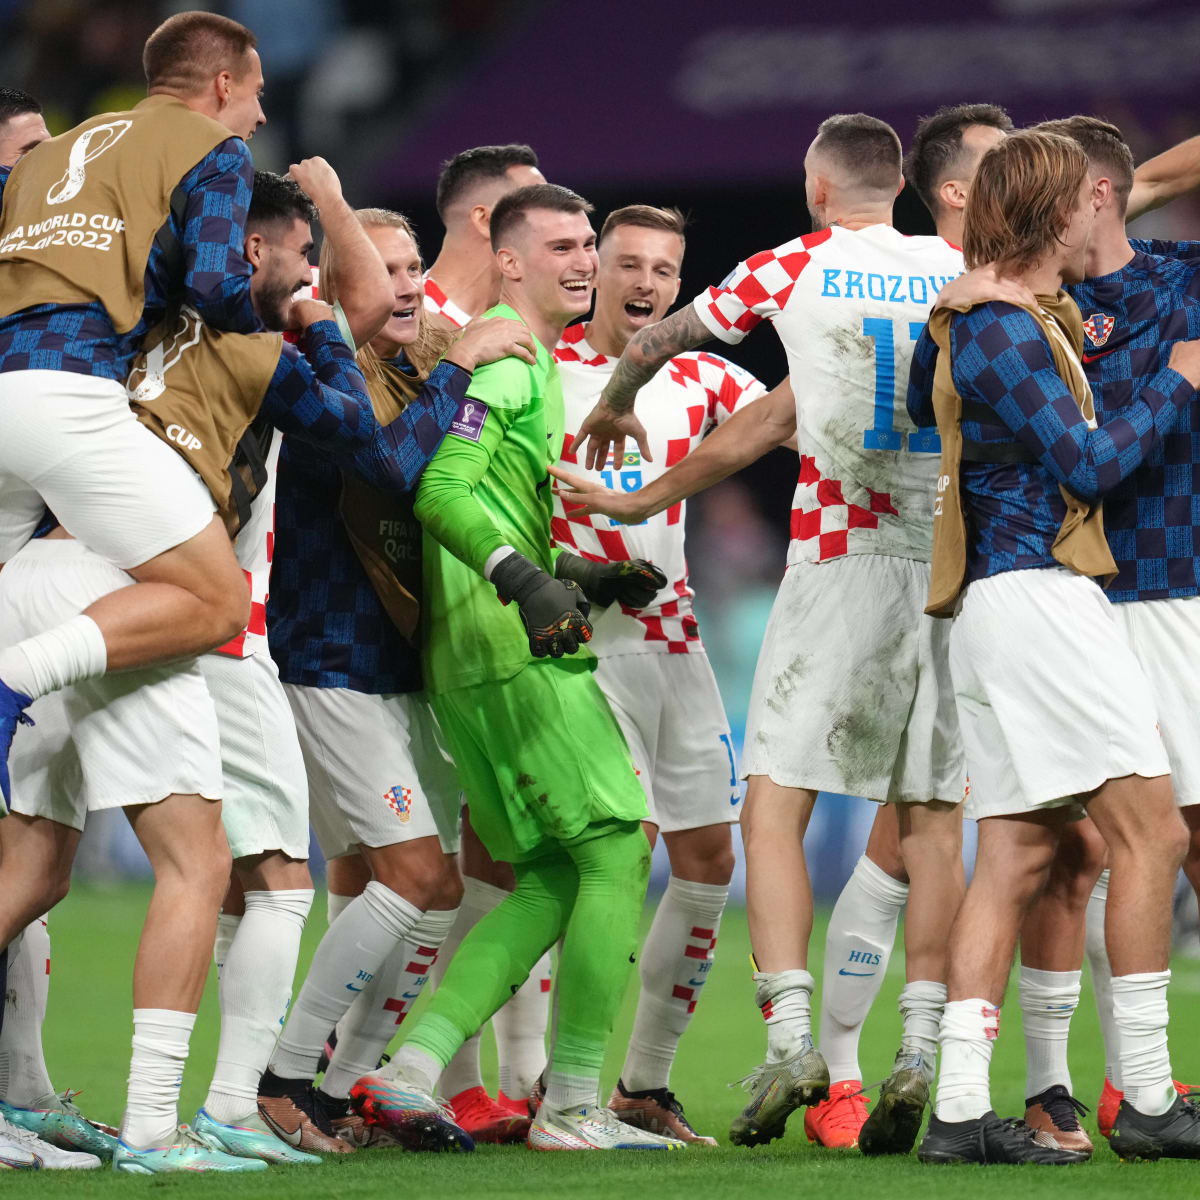 Croatia beats Brazil on penalties in World Cup quarterfinals